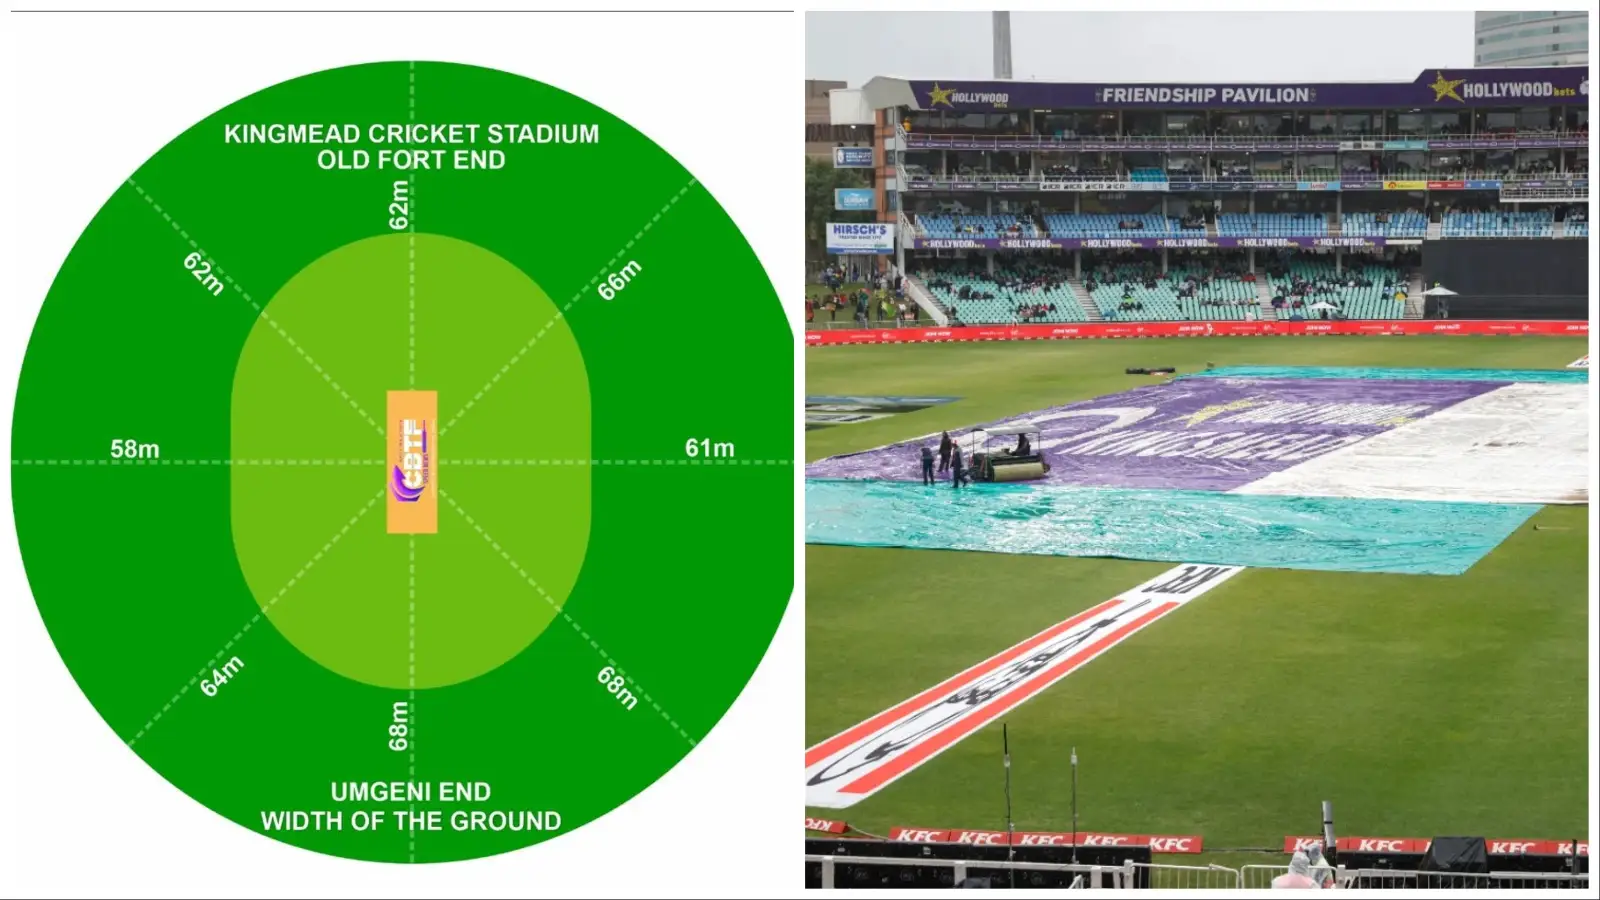 Kingsmead Cricket Ground Durban Boundary Length and Seating Capacity